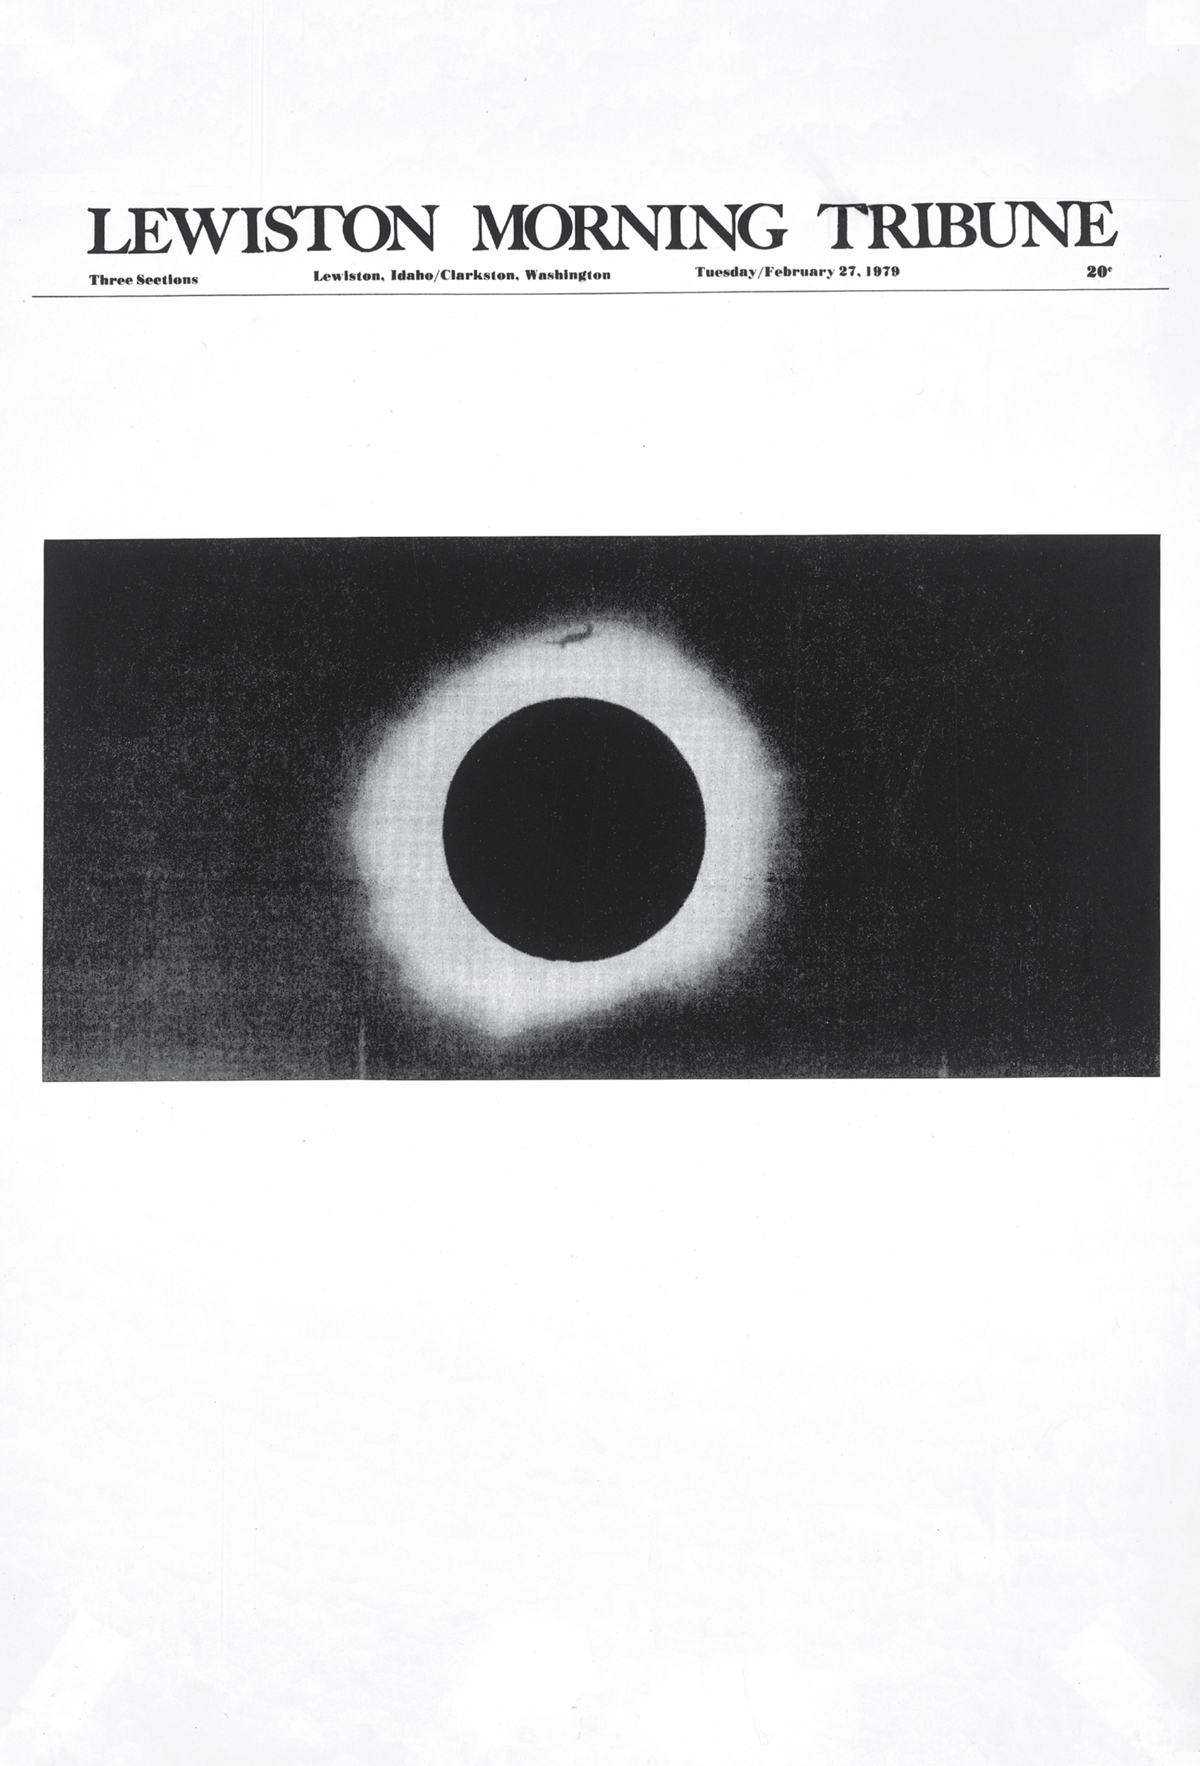 Sarah Charlesworth, 'Arc of Total Eclipse, February 26, 1979' (detail), 1979/2010.